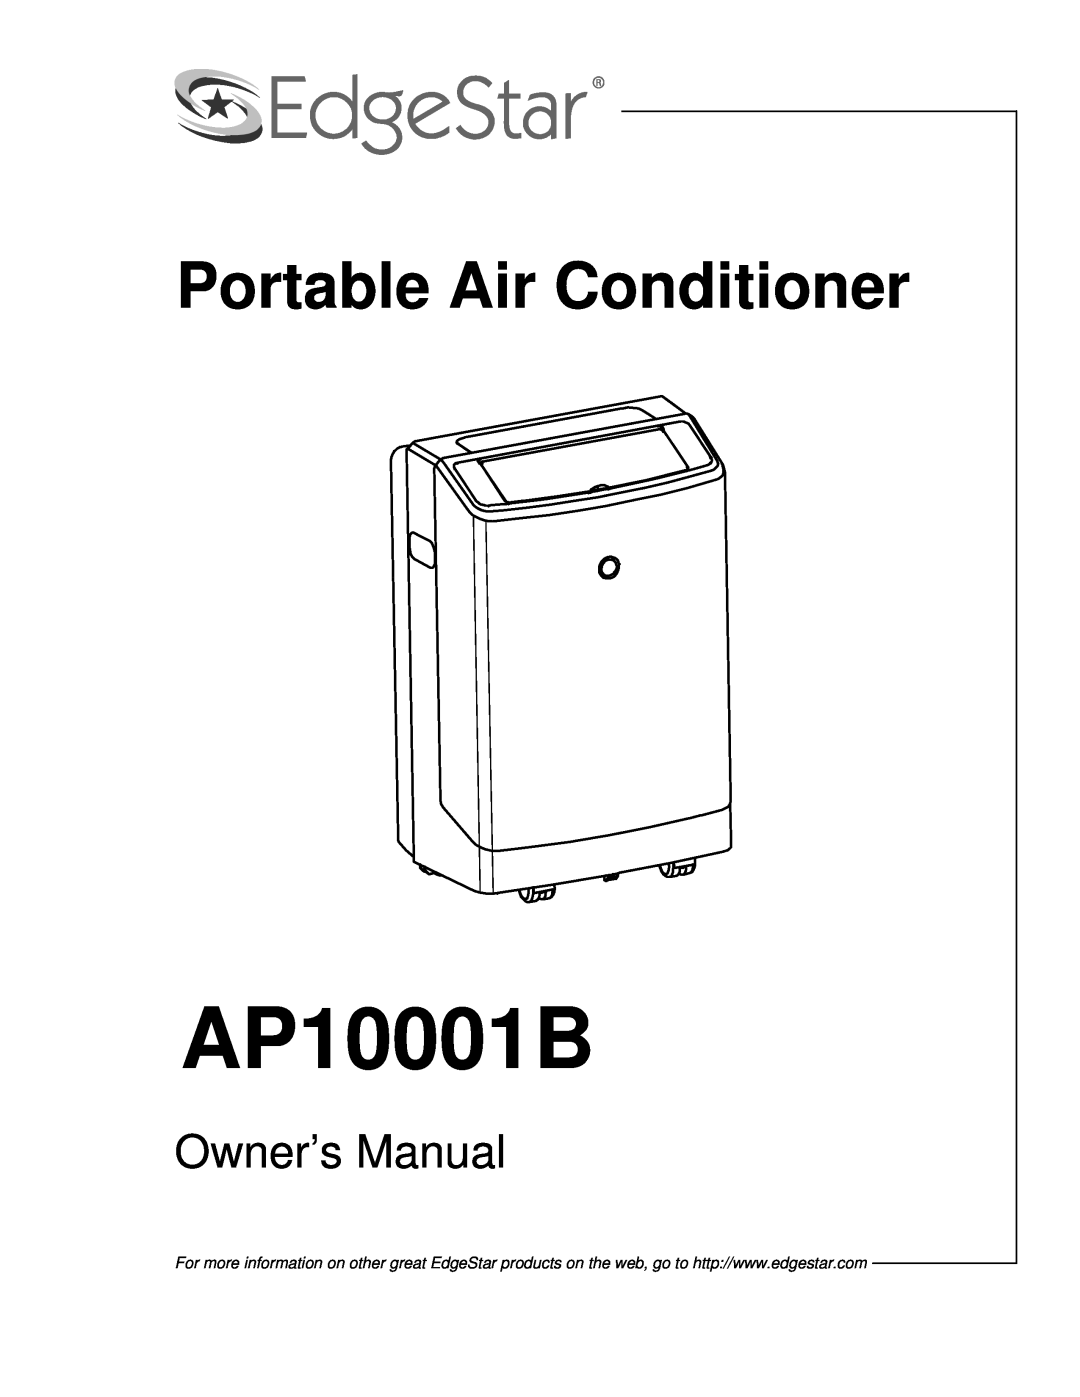 EdgeStar AP10001B owner manual Portable Air Conditioner 